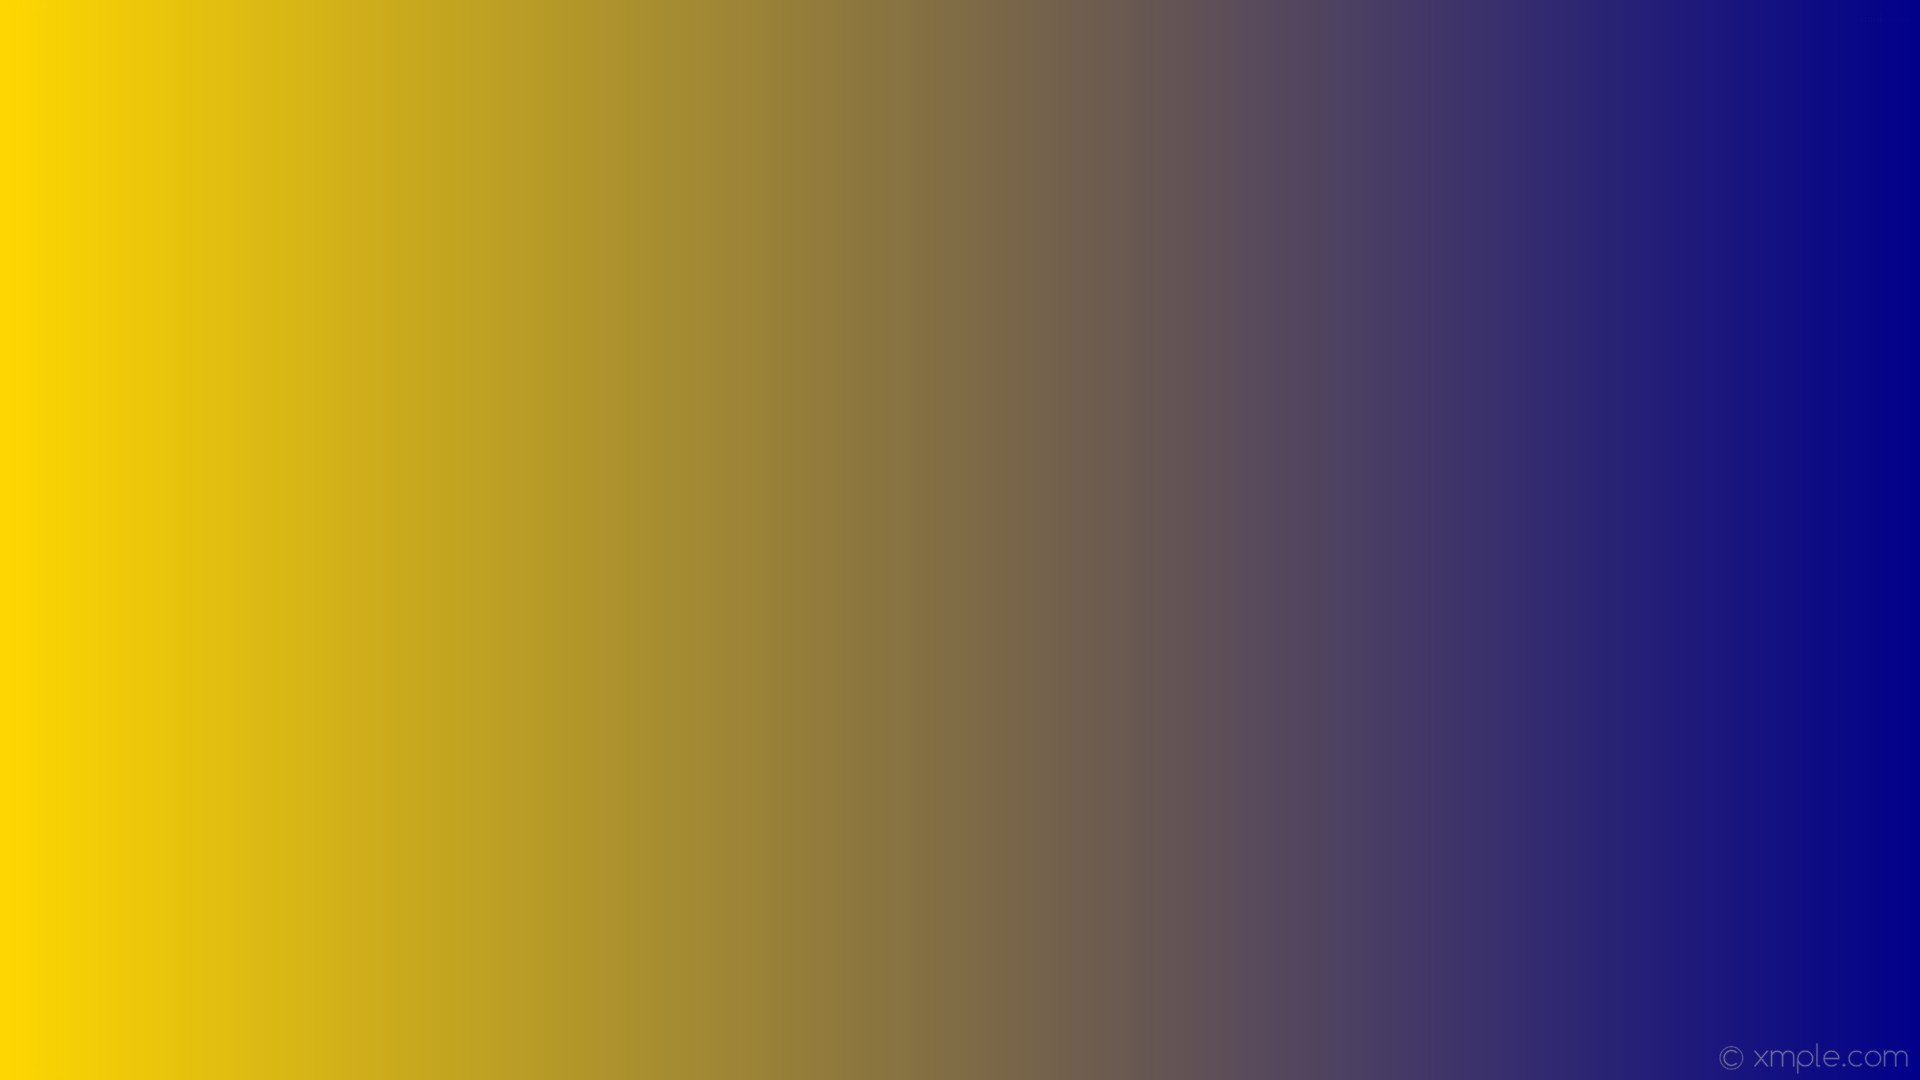 1920x1080 wallpaper yellow gradient linear blue gold dark blue #ffd700 #00008b 180Â°